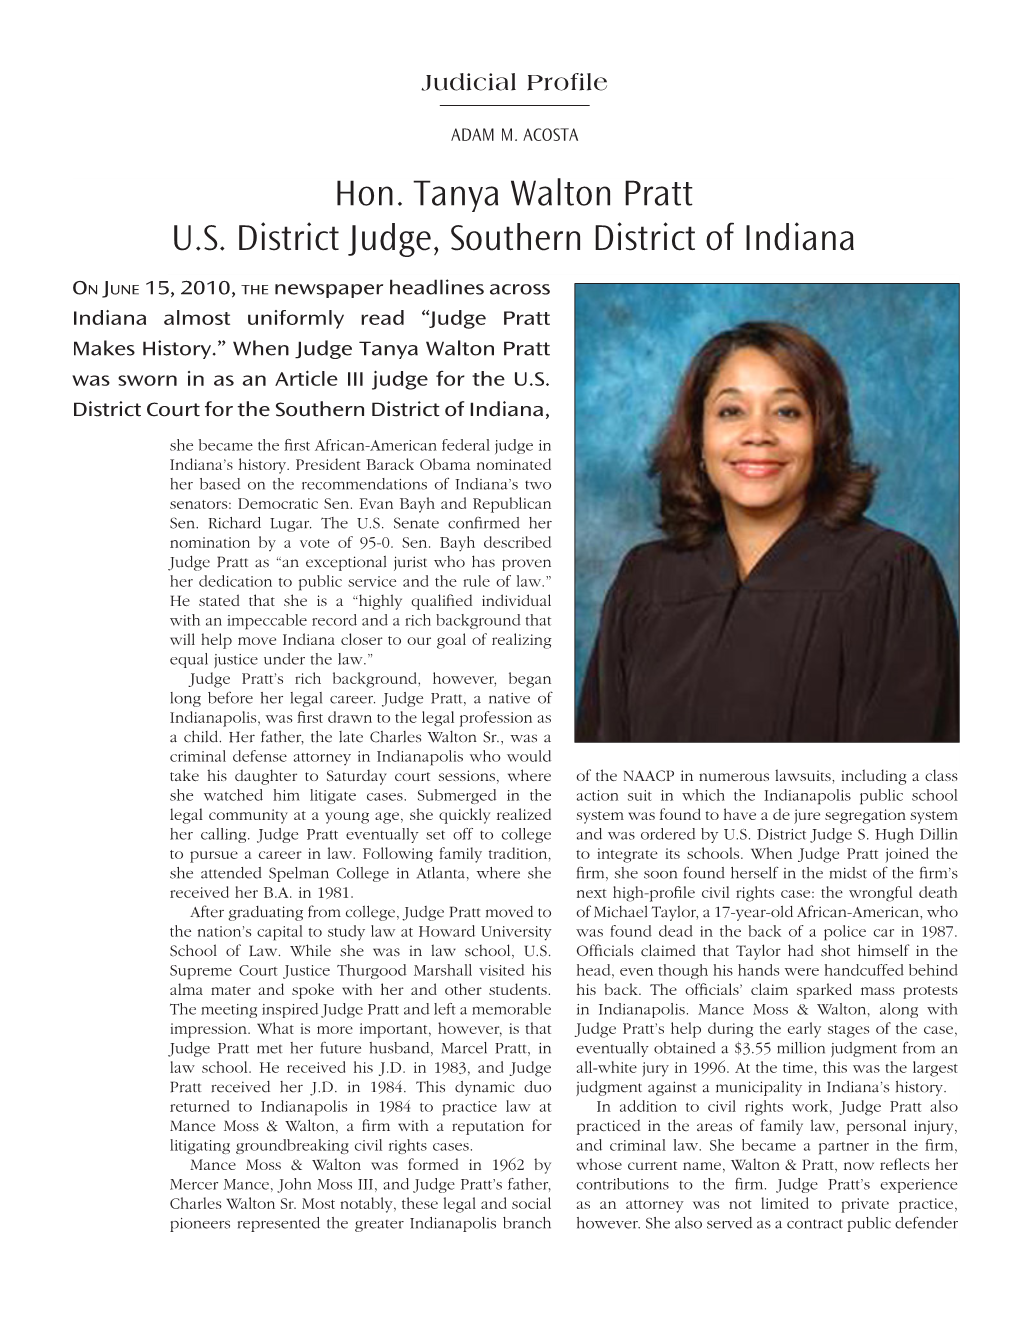 Hon. Tanya Walton Pratt U.S. District Judge, Southern District of Indiana